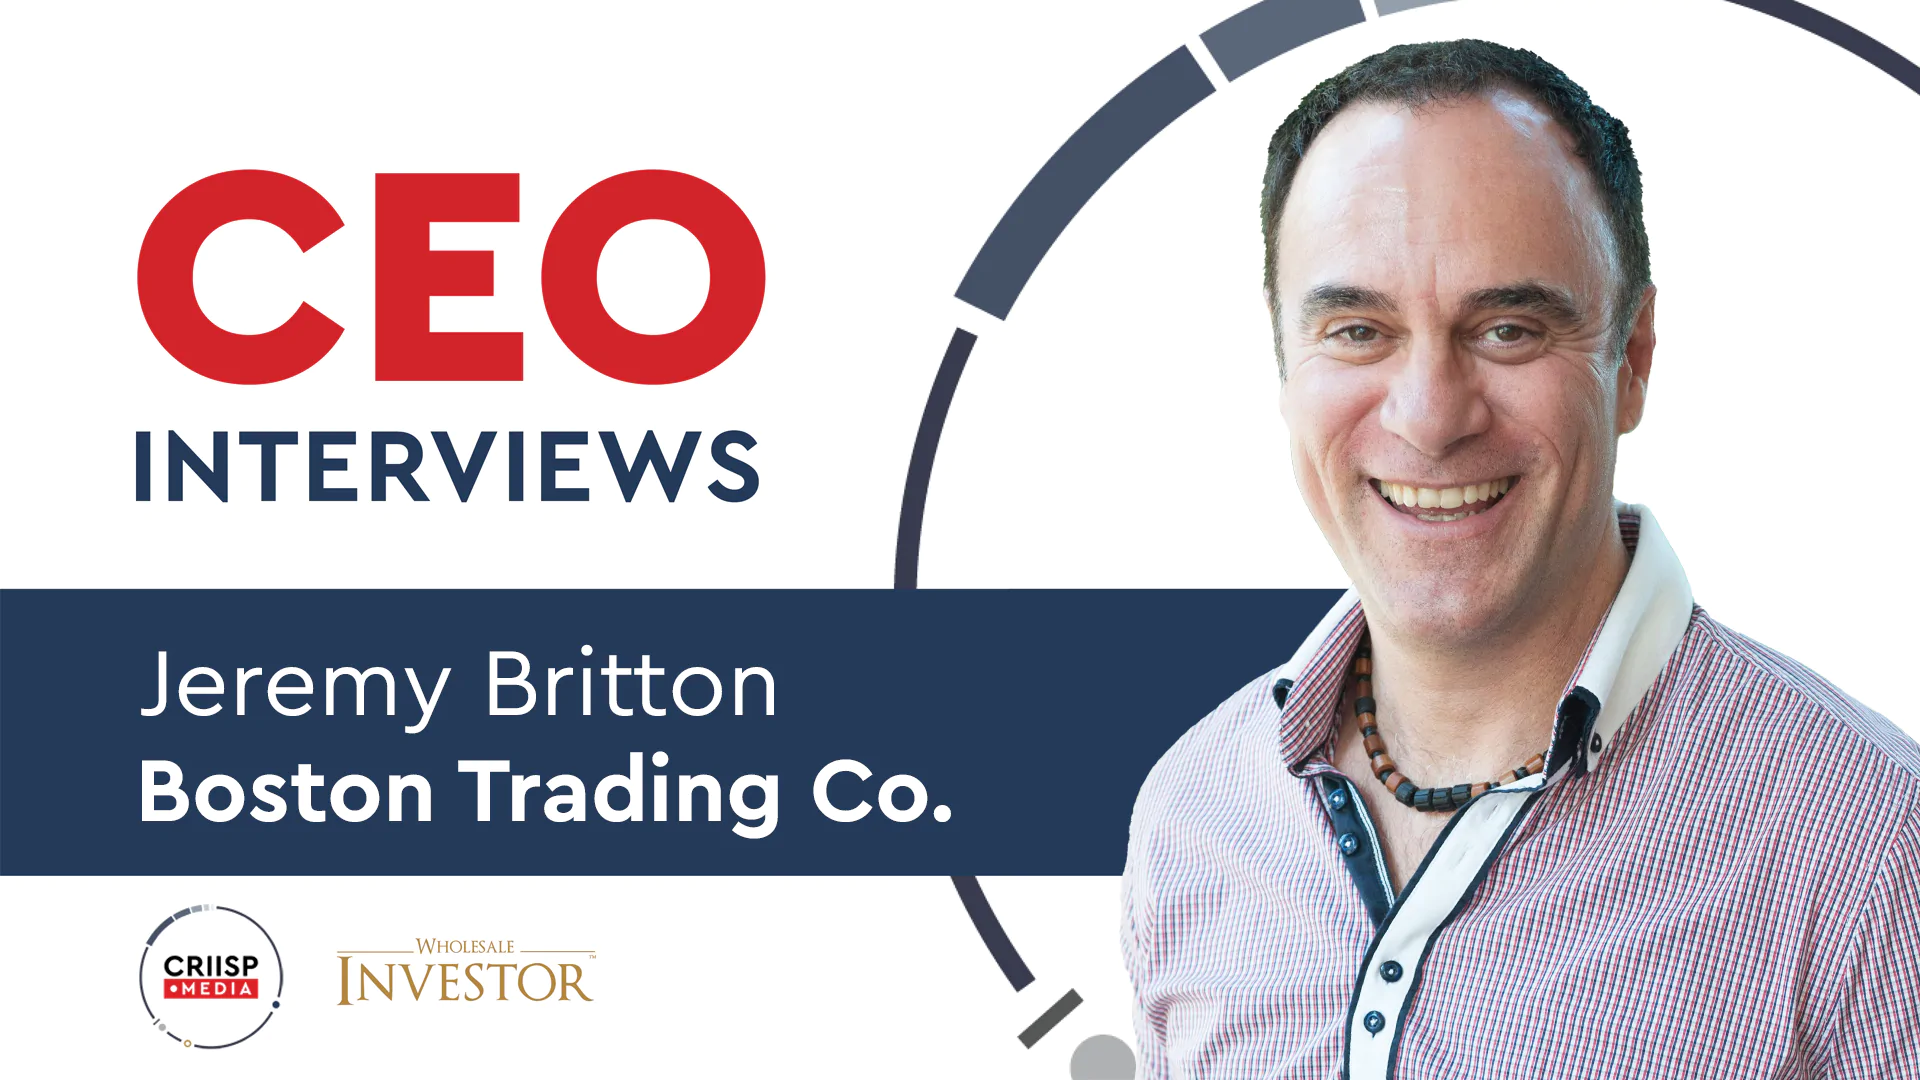 Jeremy Britton of Boston Trading Co.